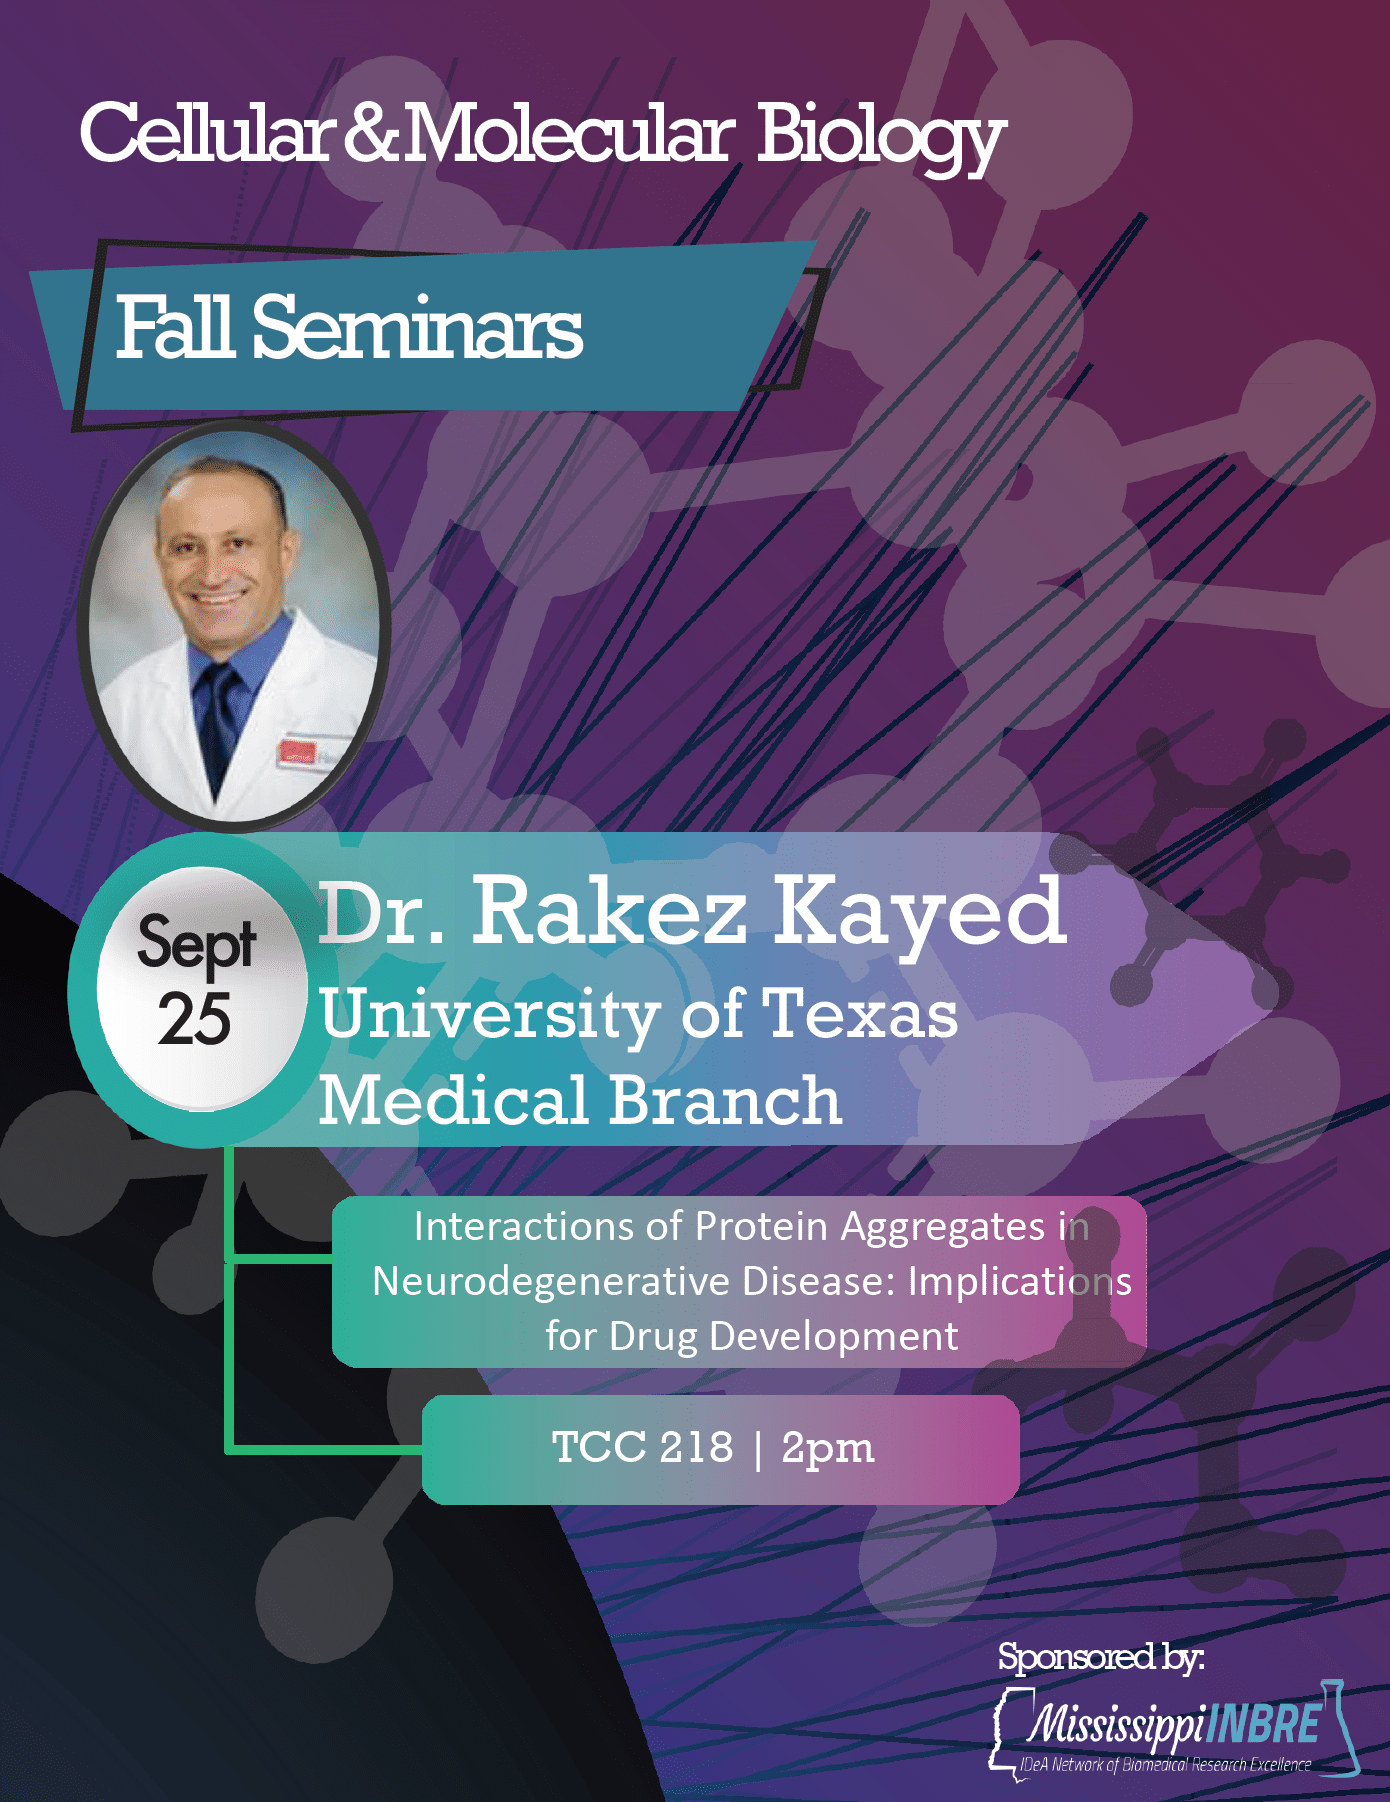 Dr. Rakez Kayed visits USM for CMB Seminar Series